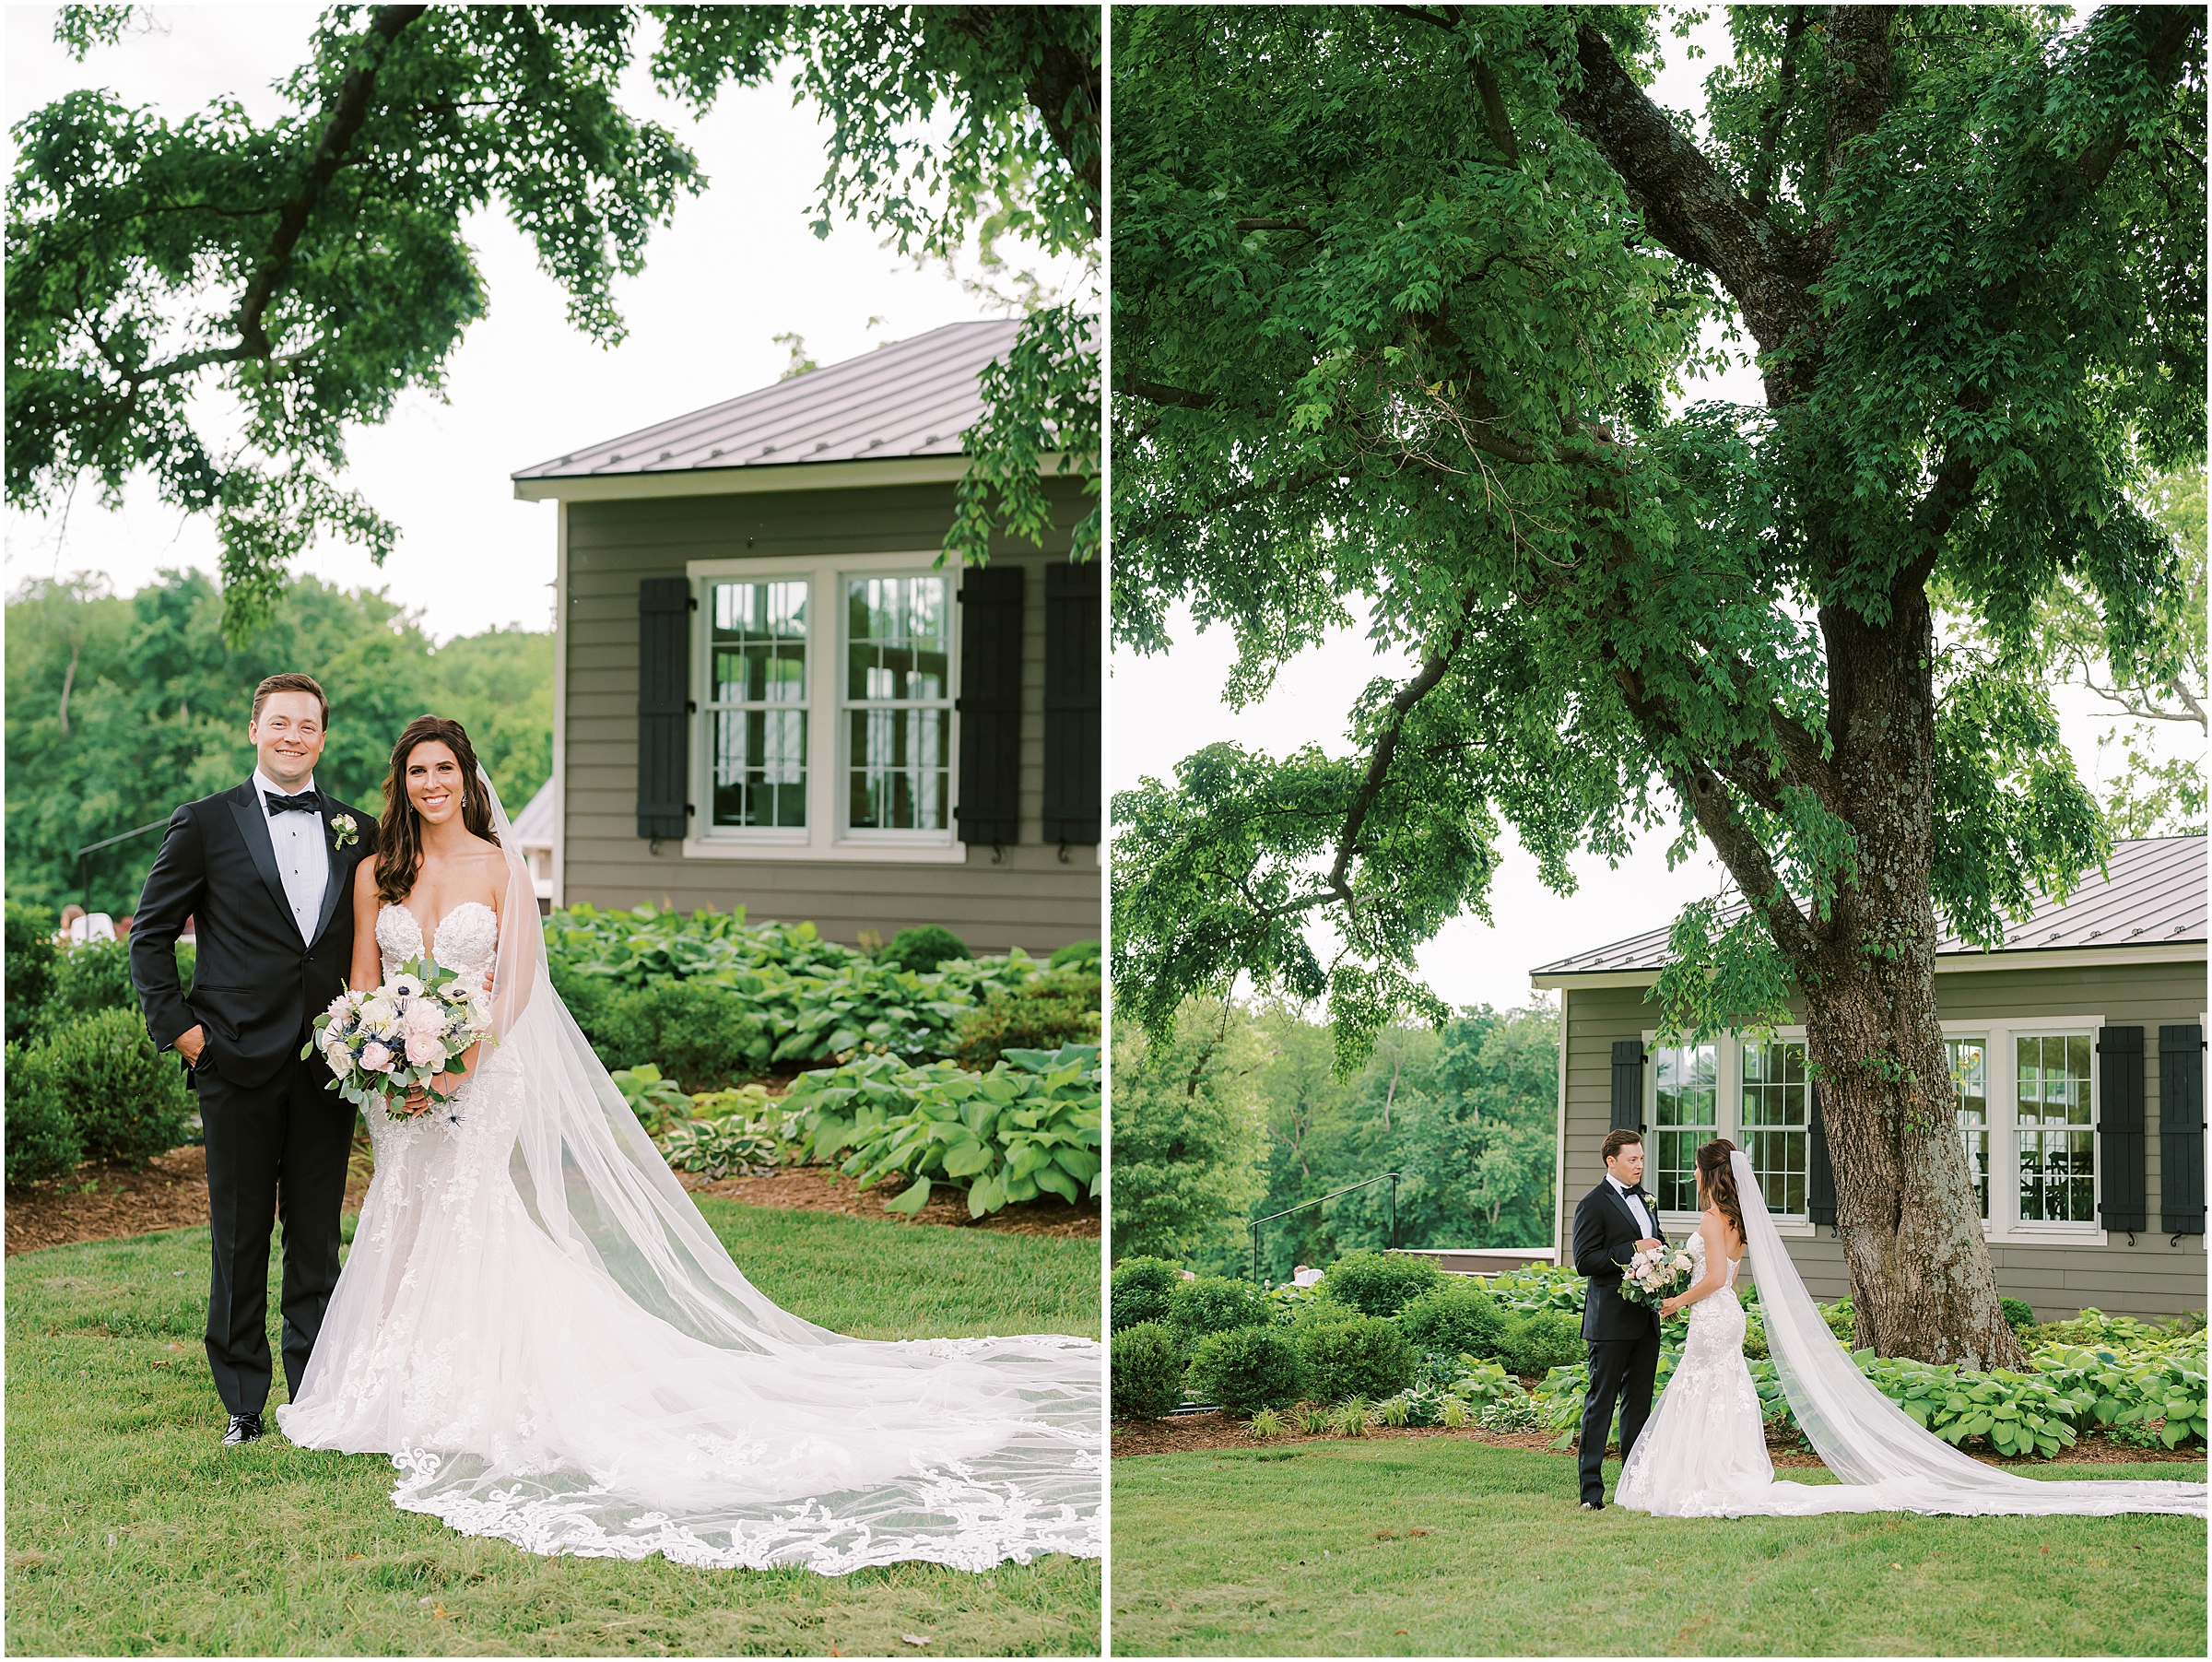 First look between bride and groom during wedding at Fleetwood Farm Winery in Leesburg, VA